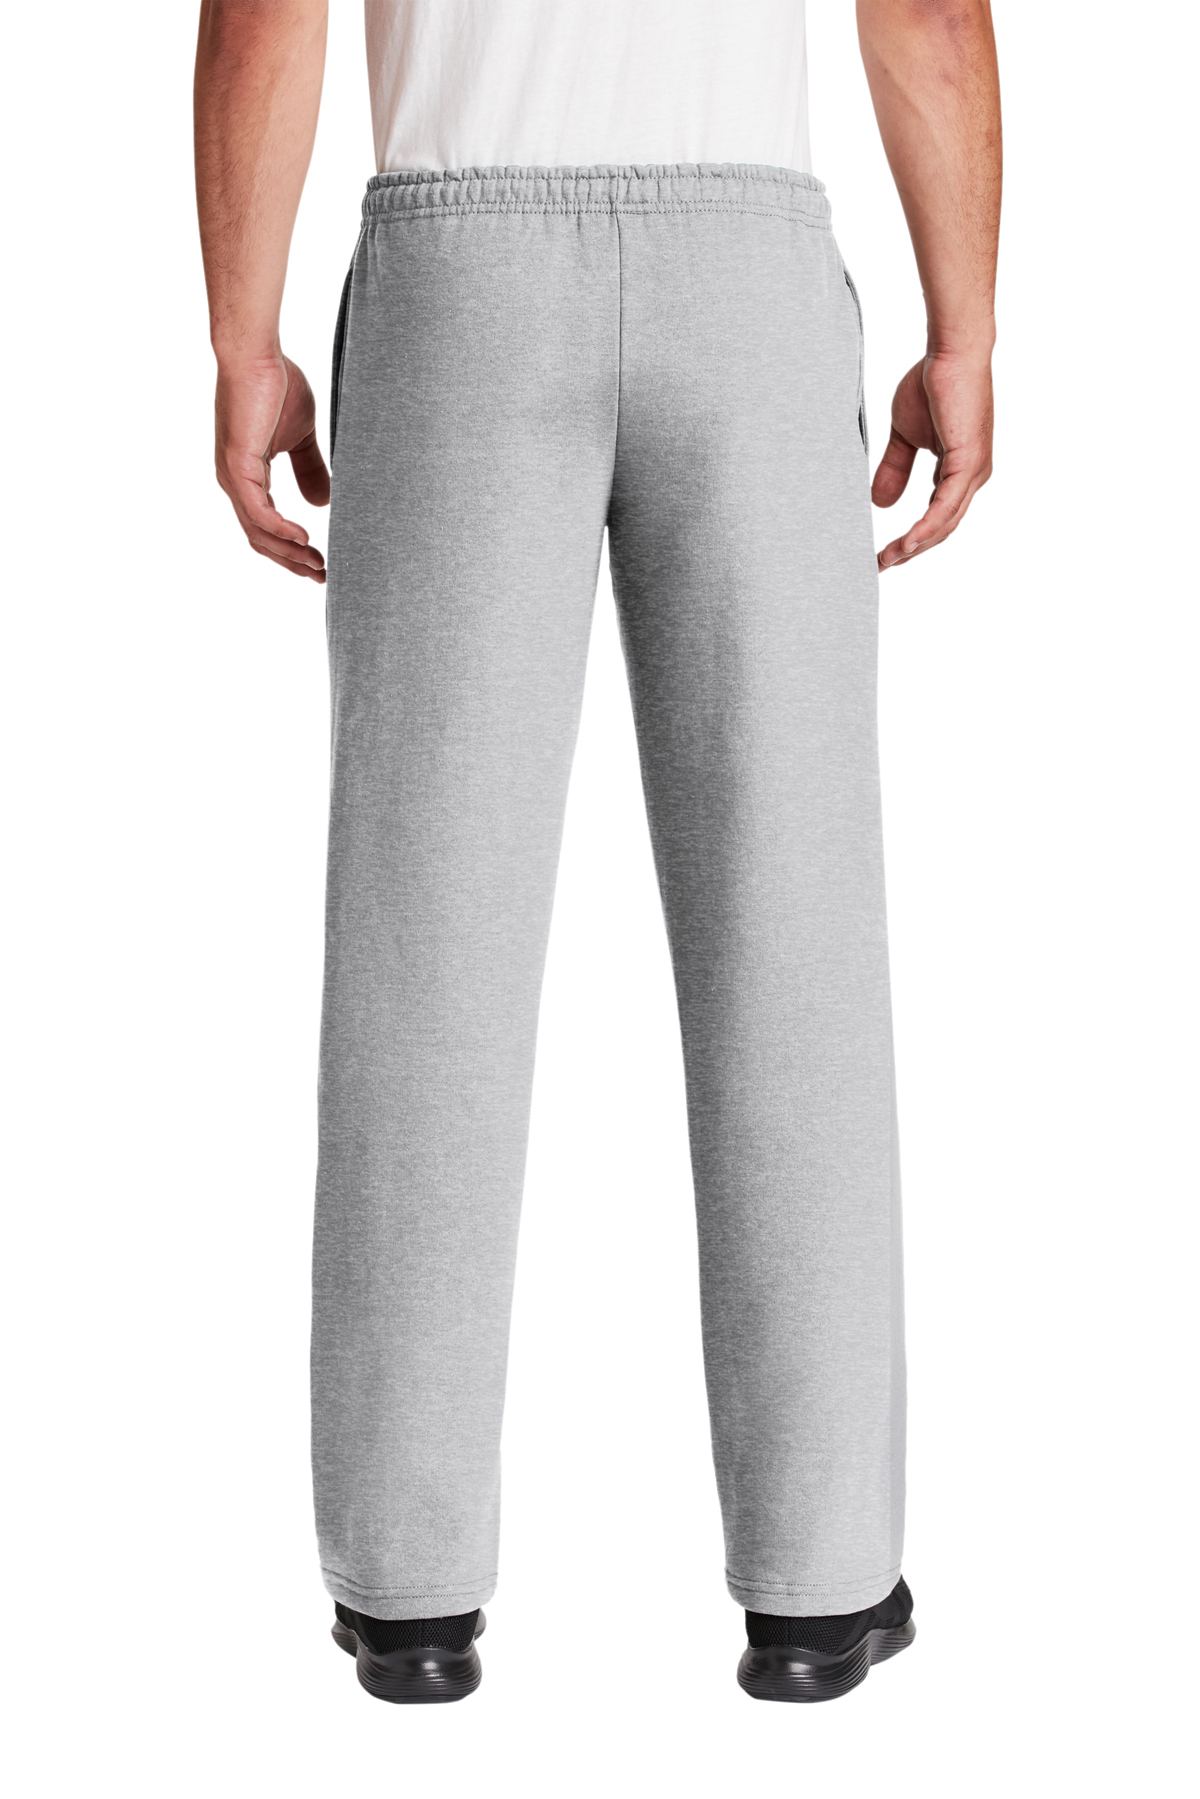 12 Gildan Fleece Elastic Bottom Sweatpants Pockets Sport Grey Size M Youth 18100